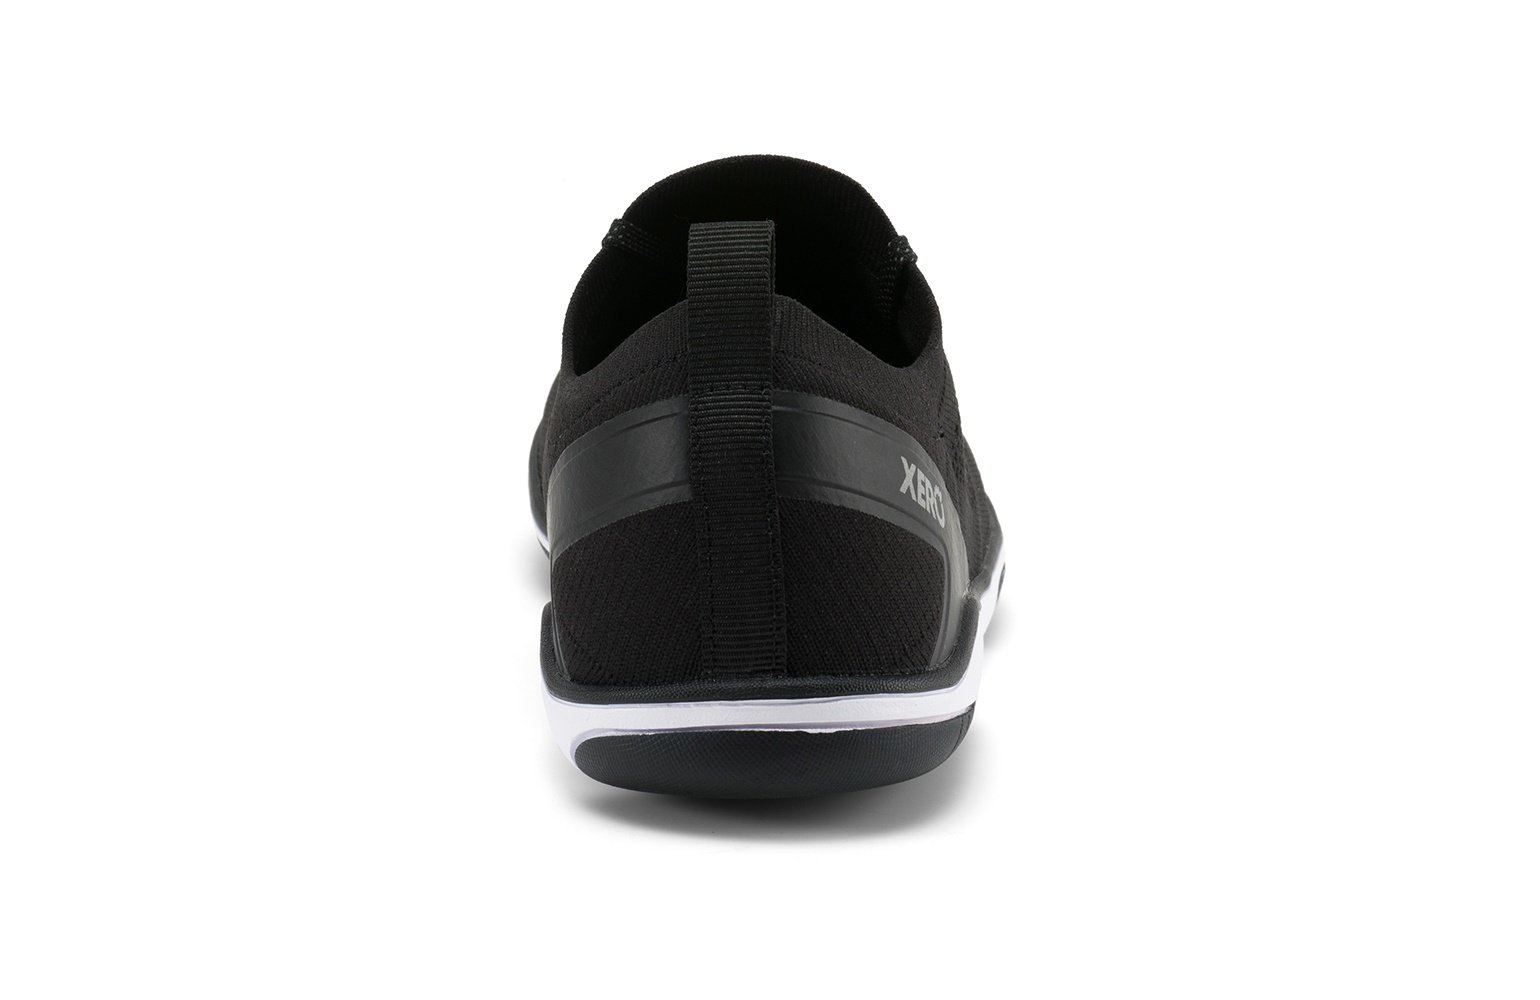 Xero Shoes, Nexus Knit - NEXM-BLCK - black, heren, maat 47 eu